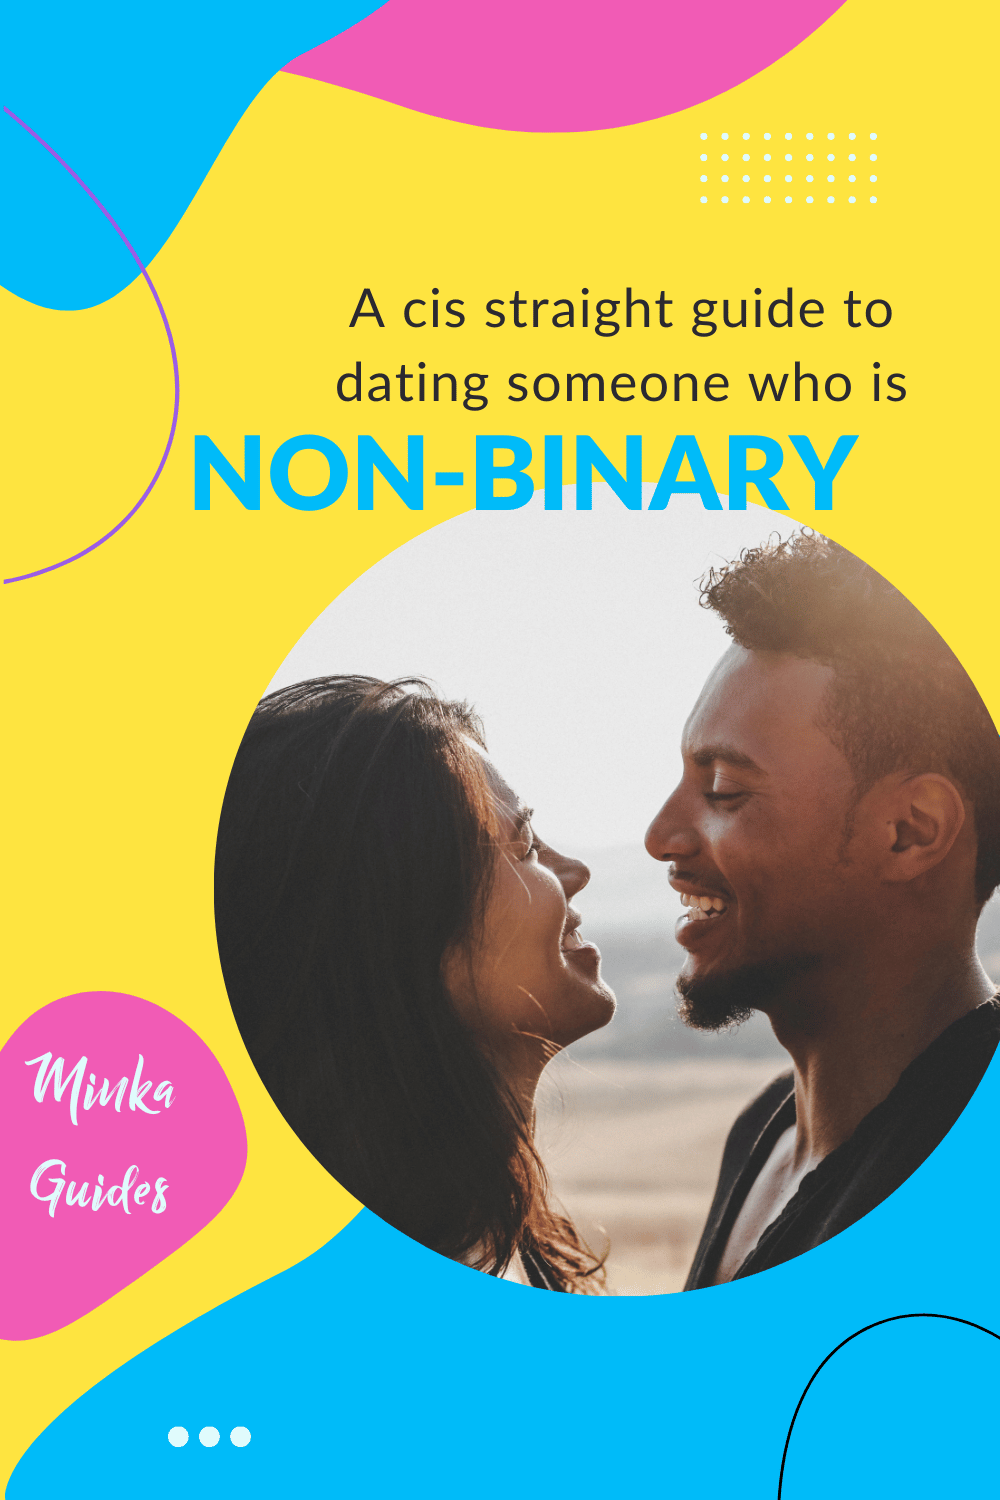 Non-binary dating | Minka Guides